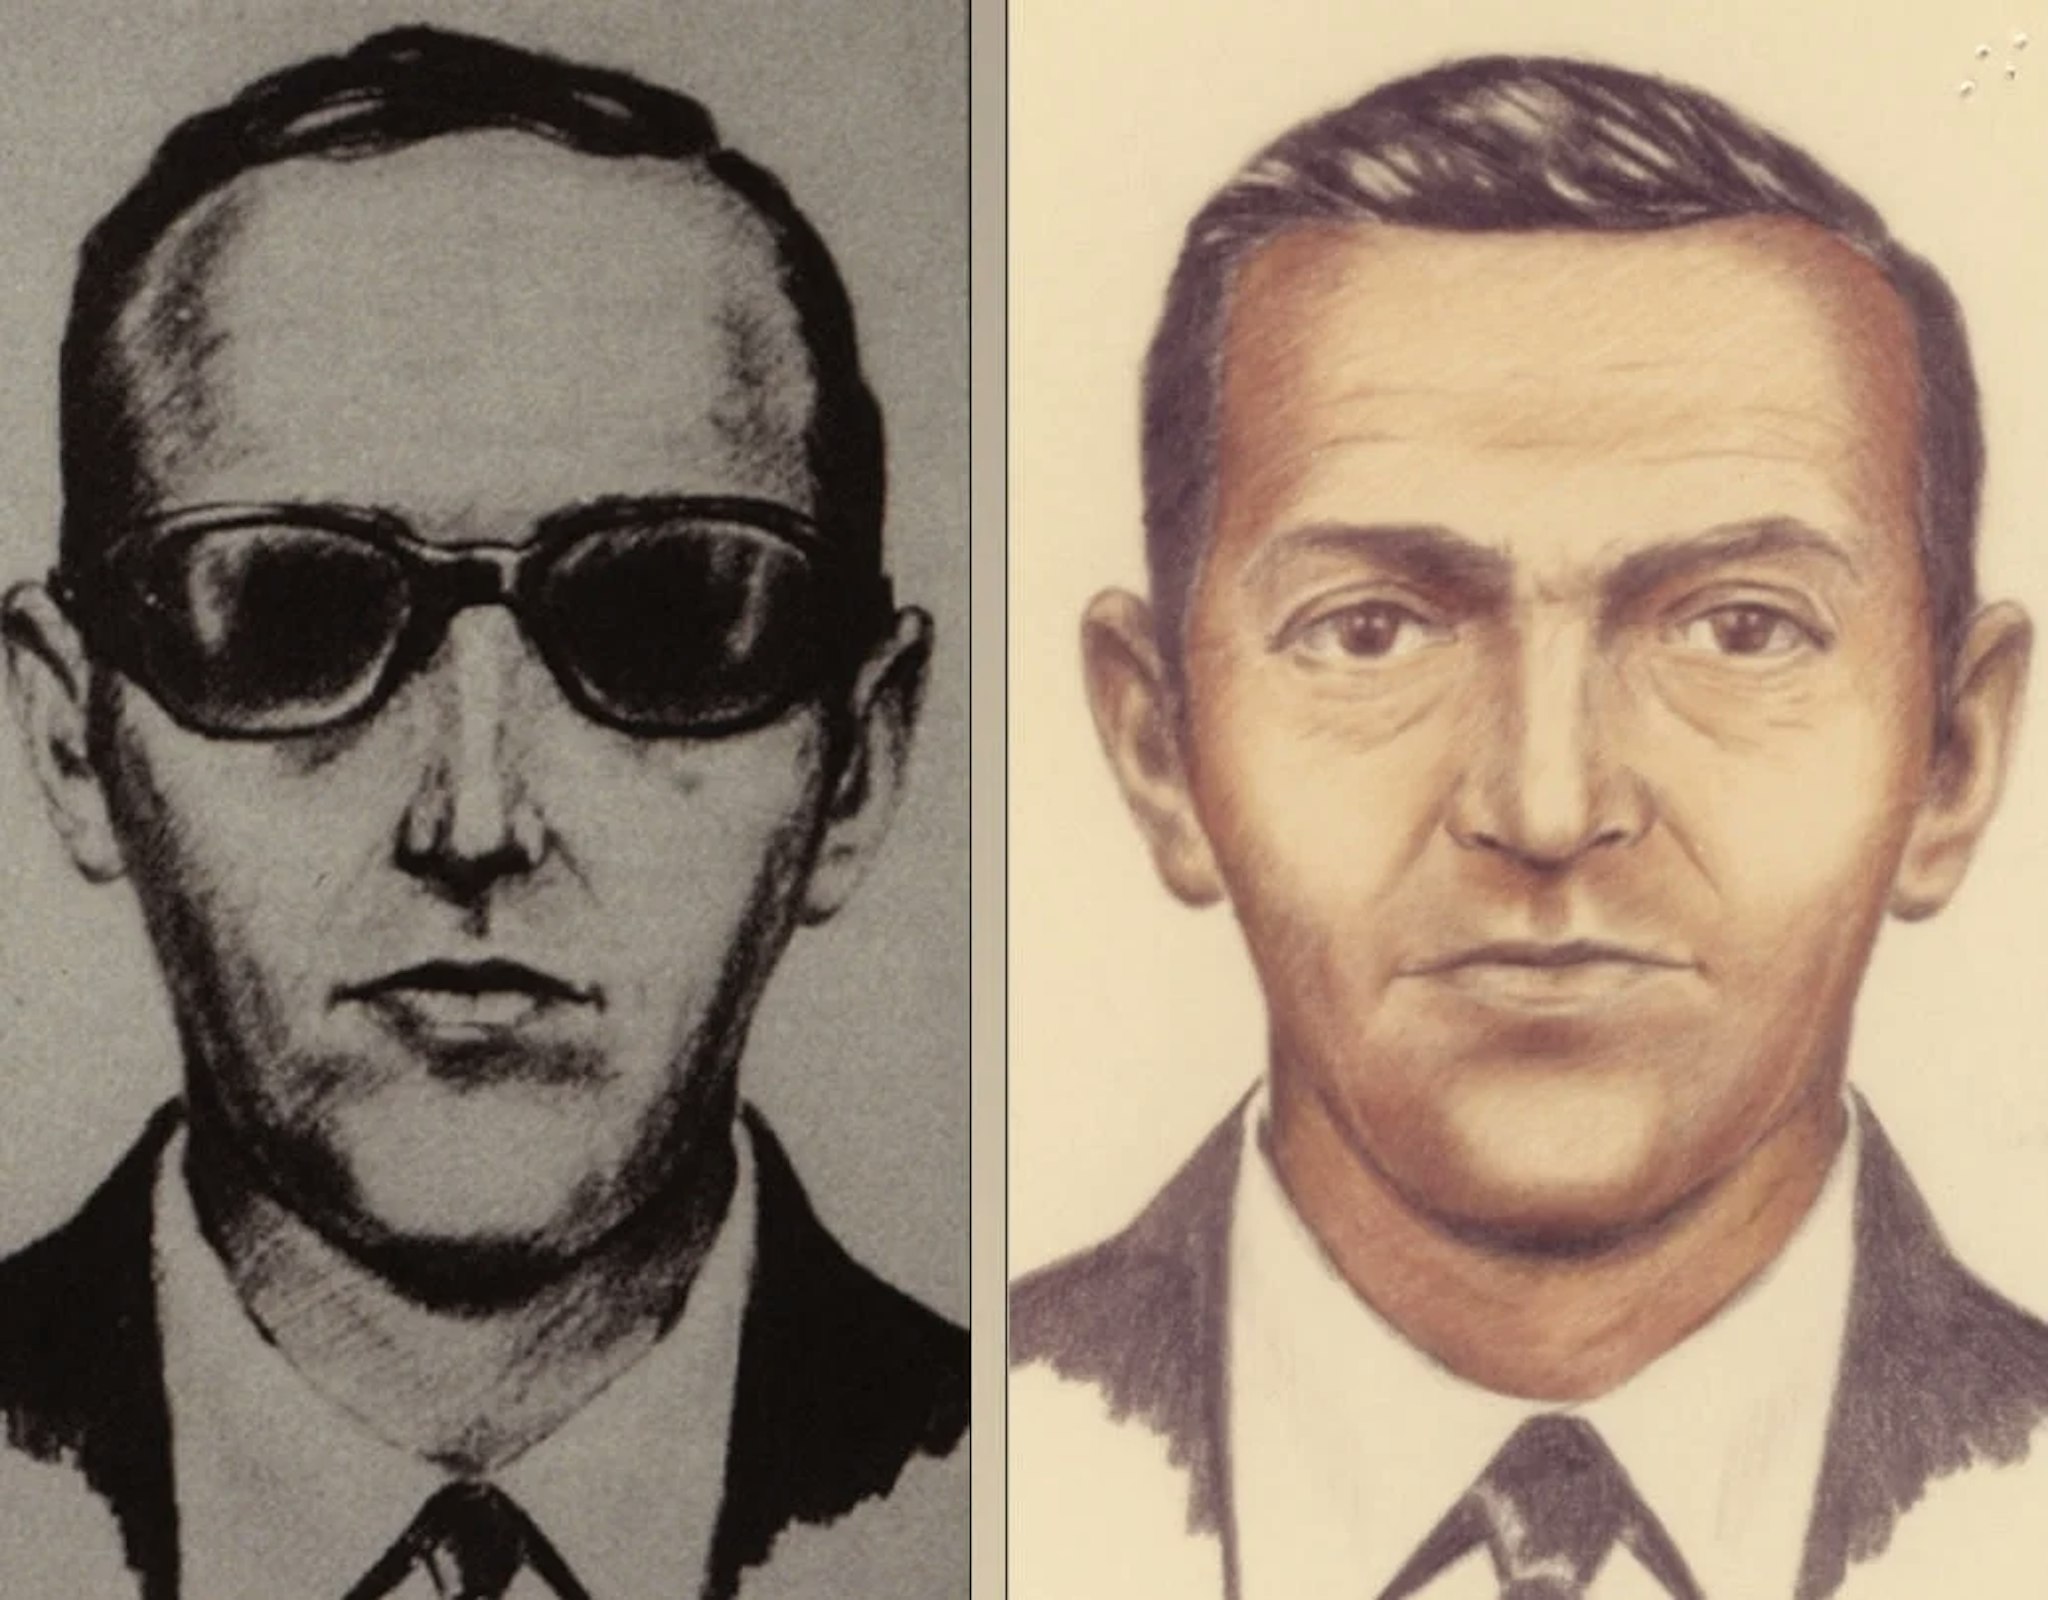 FBI artist rendering of D.B. Cooper